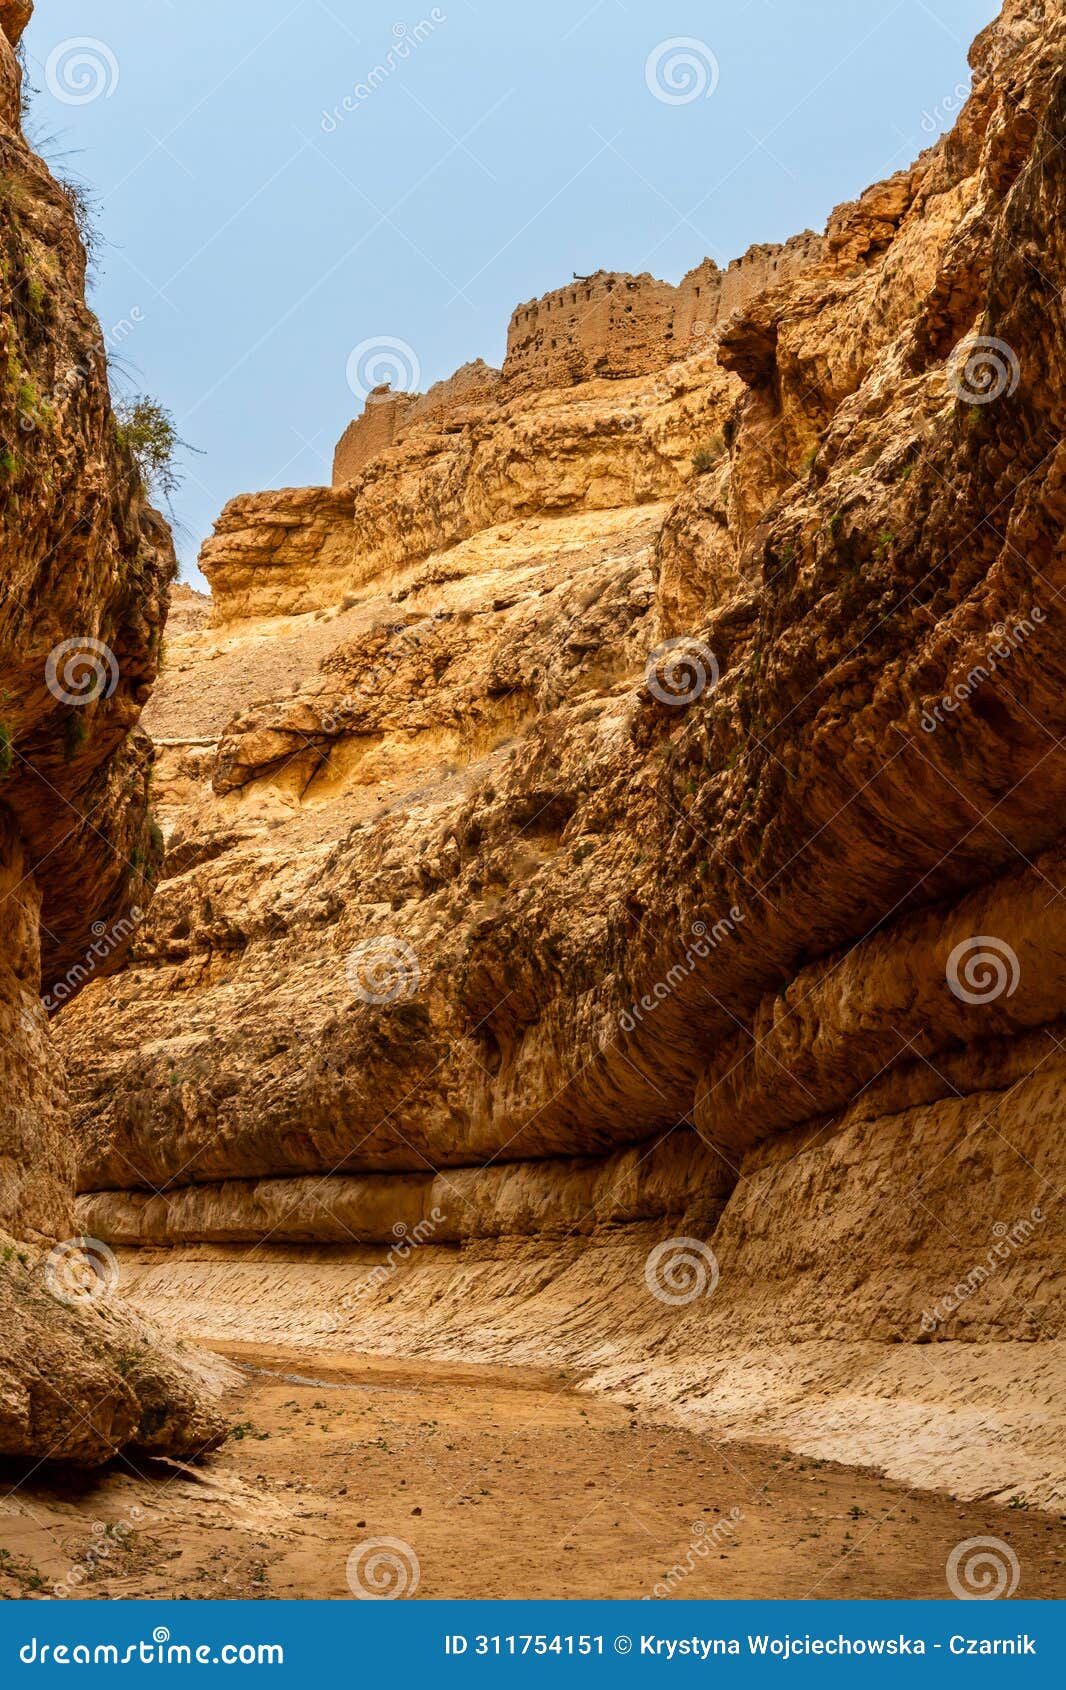 dry, desert canyon . mides, tunisia, africa